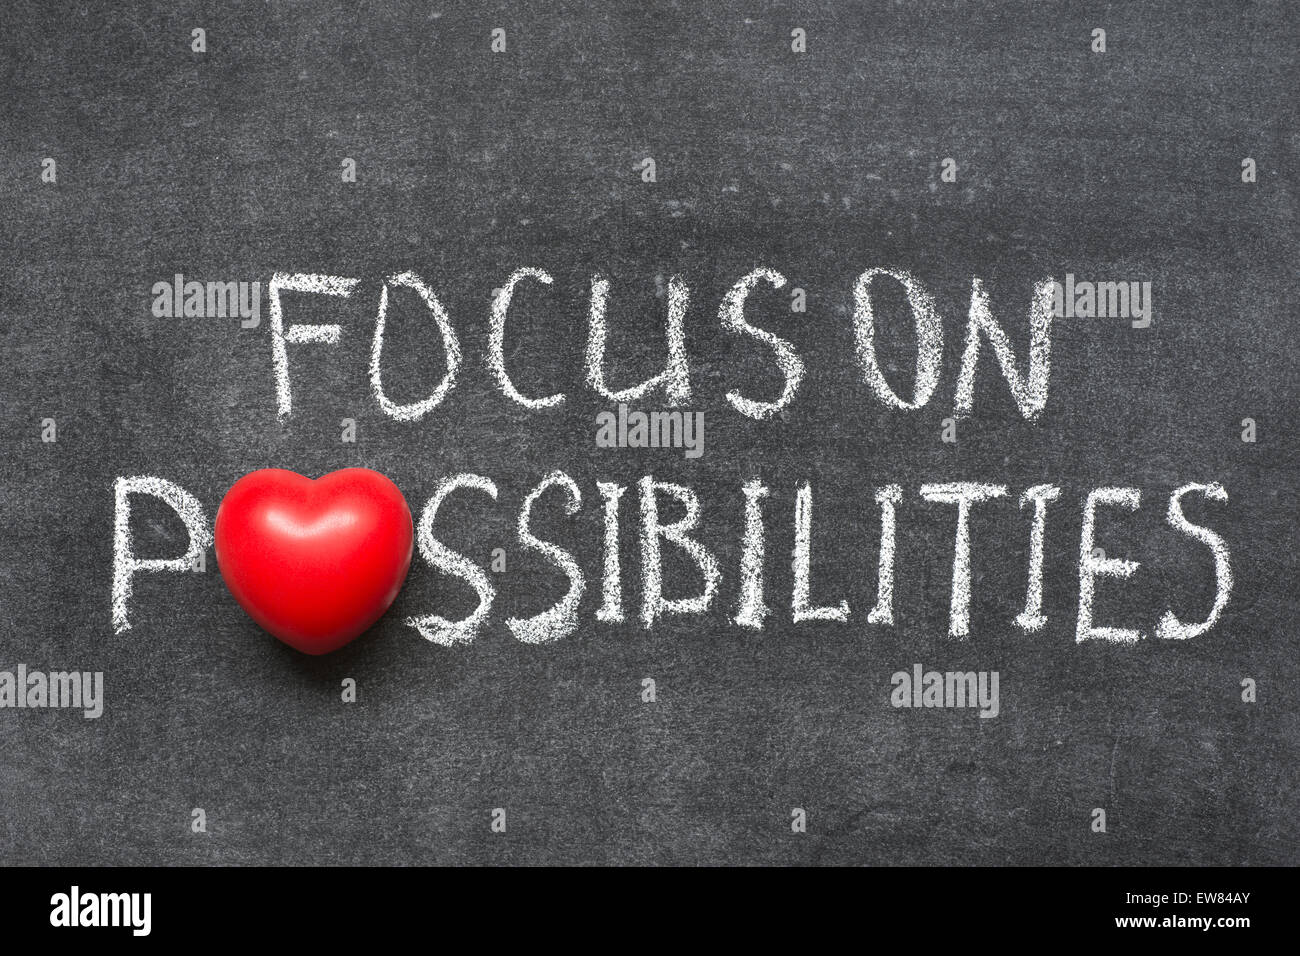 focus on possibilities phrase handwritten on blackboard with heart symbol instead of O Stock Photo